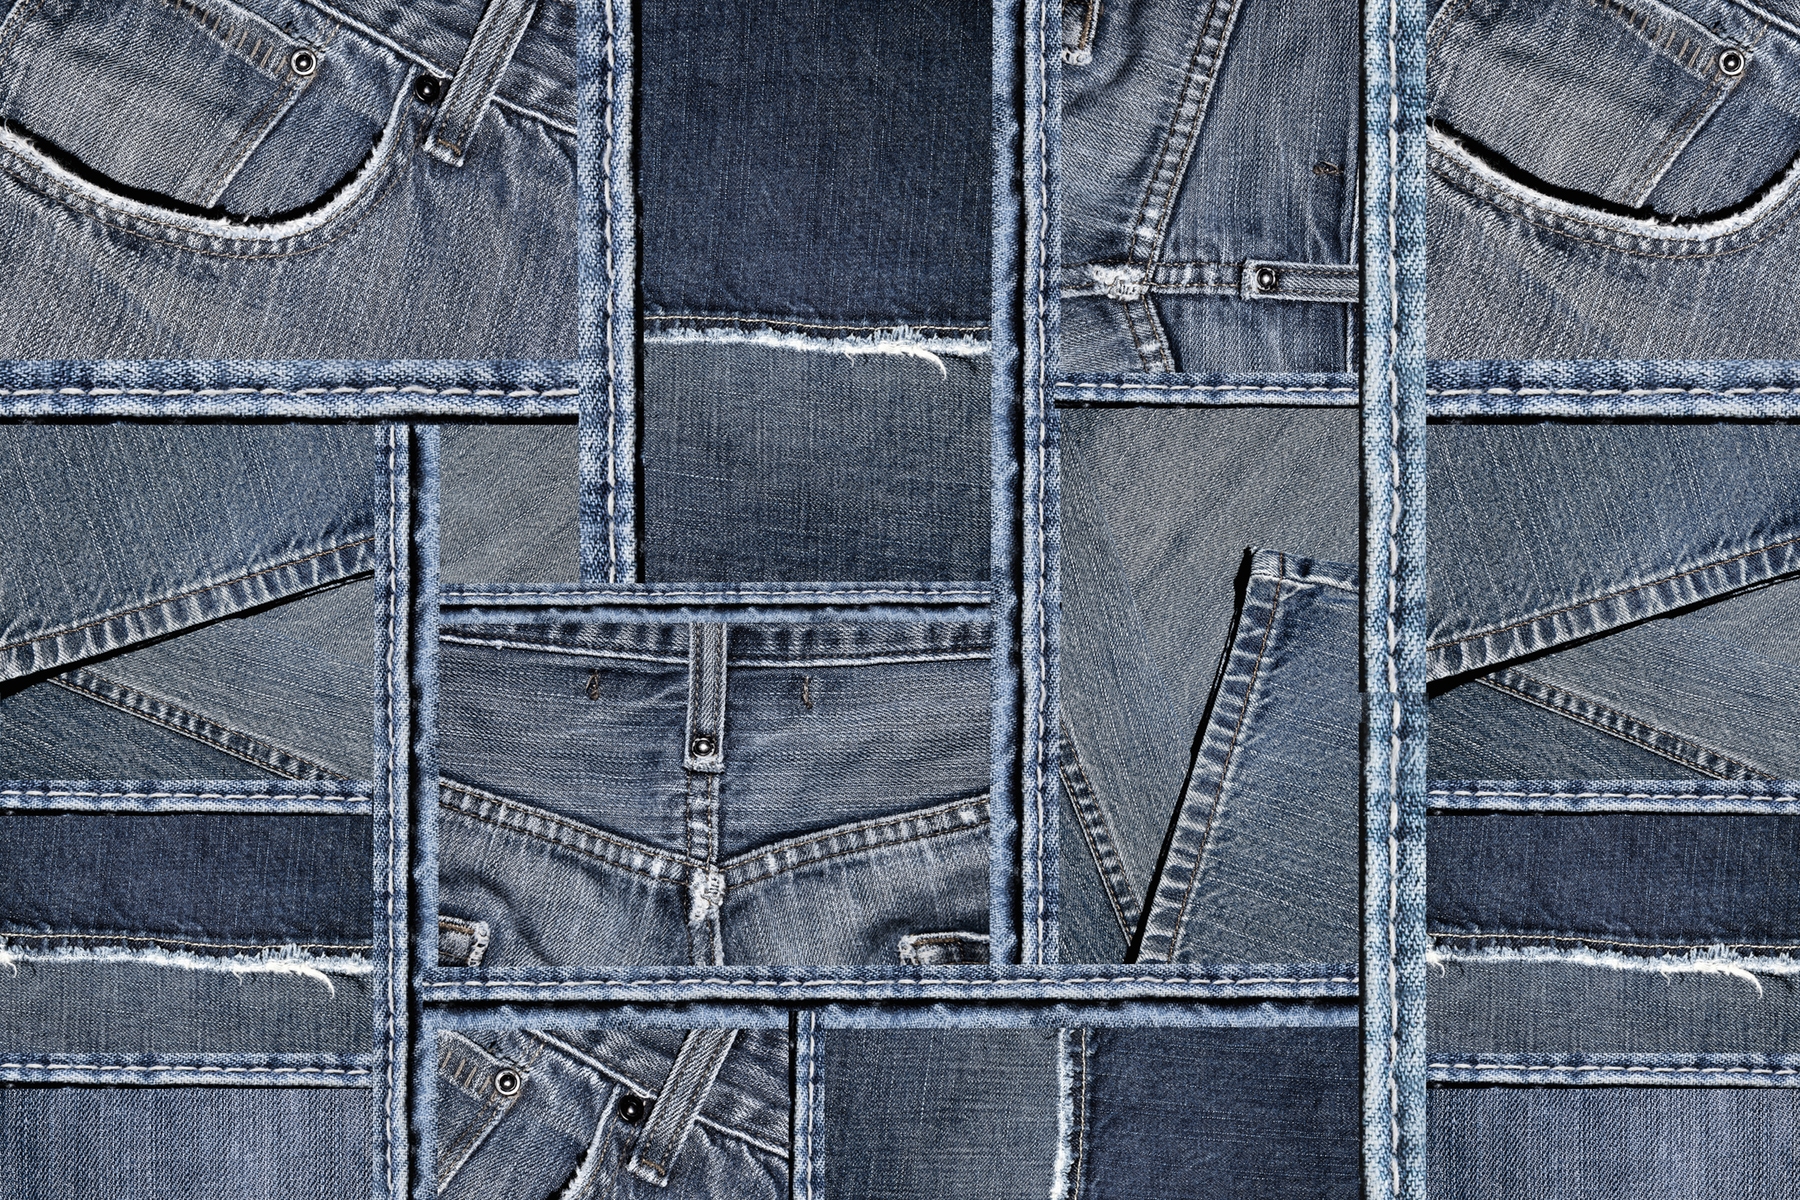 Jeans Background Clothes - Free photo on Pixabay - Pixabay